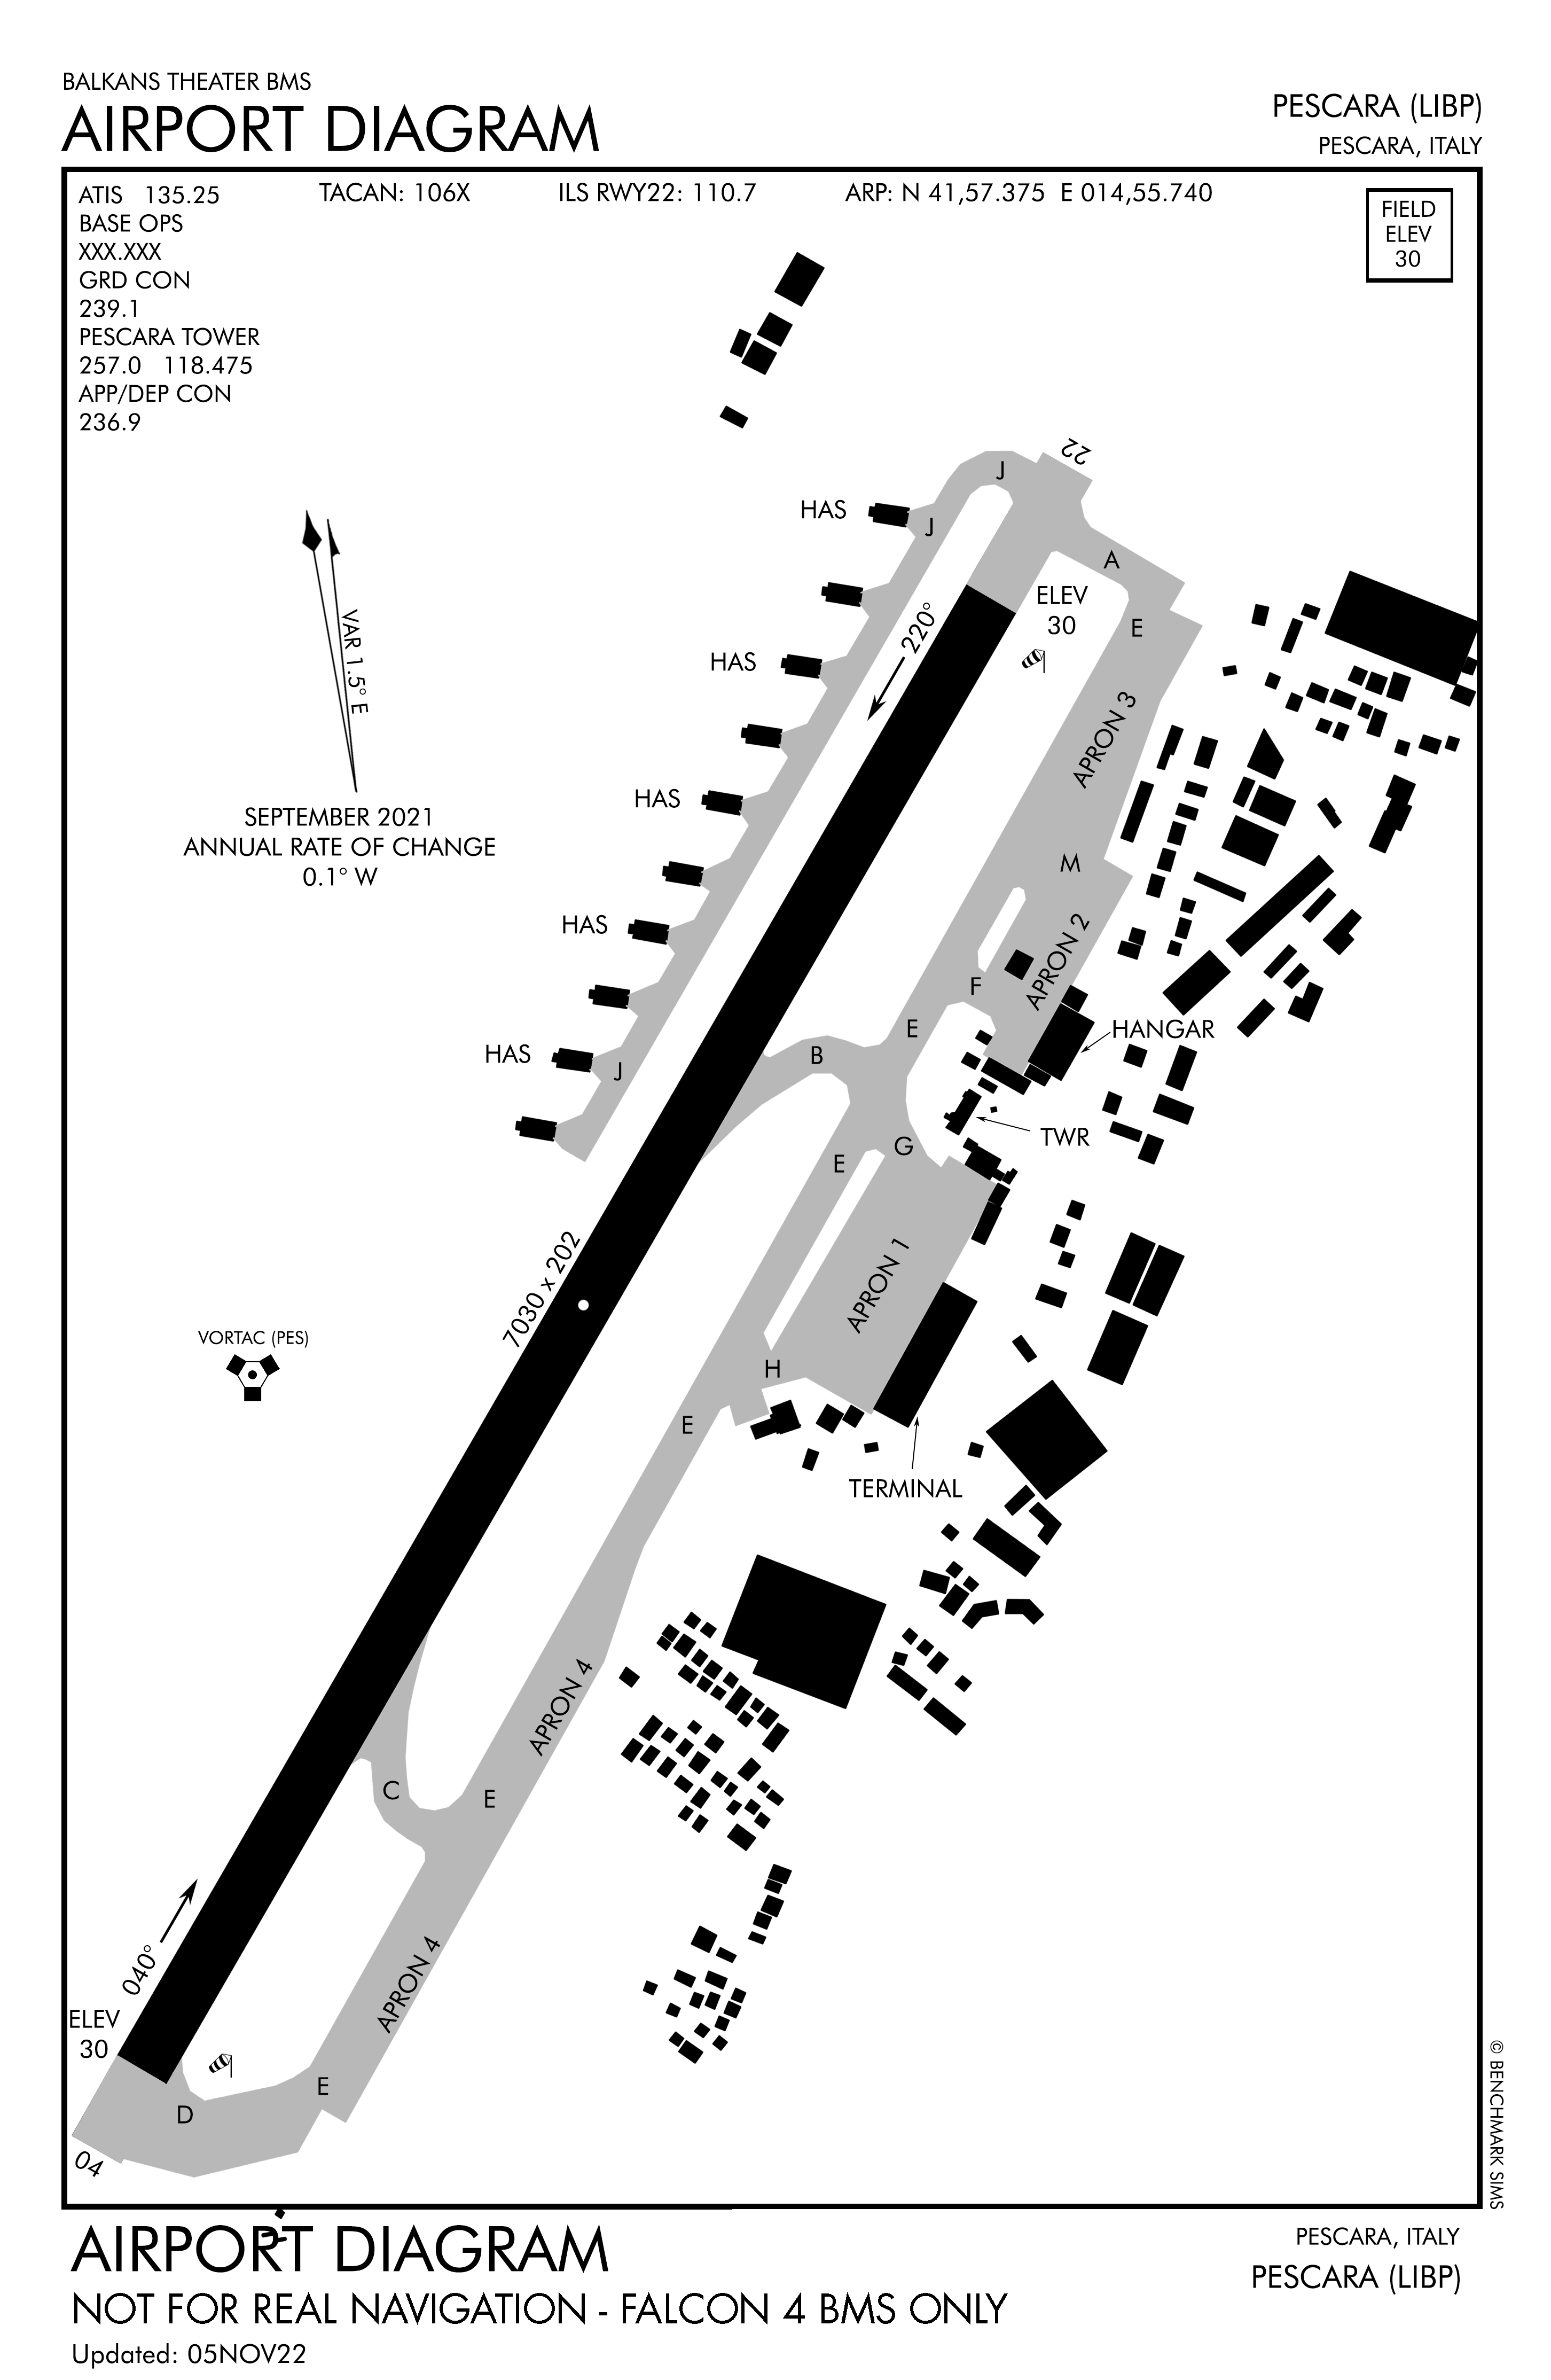 Arrival Airbase Diagram